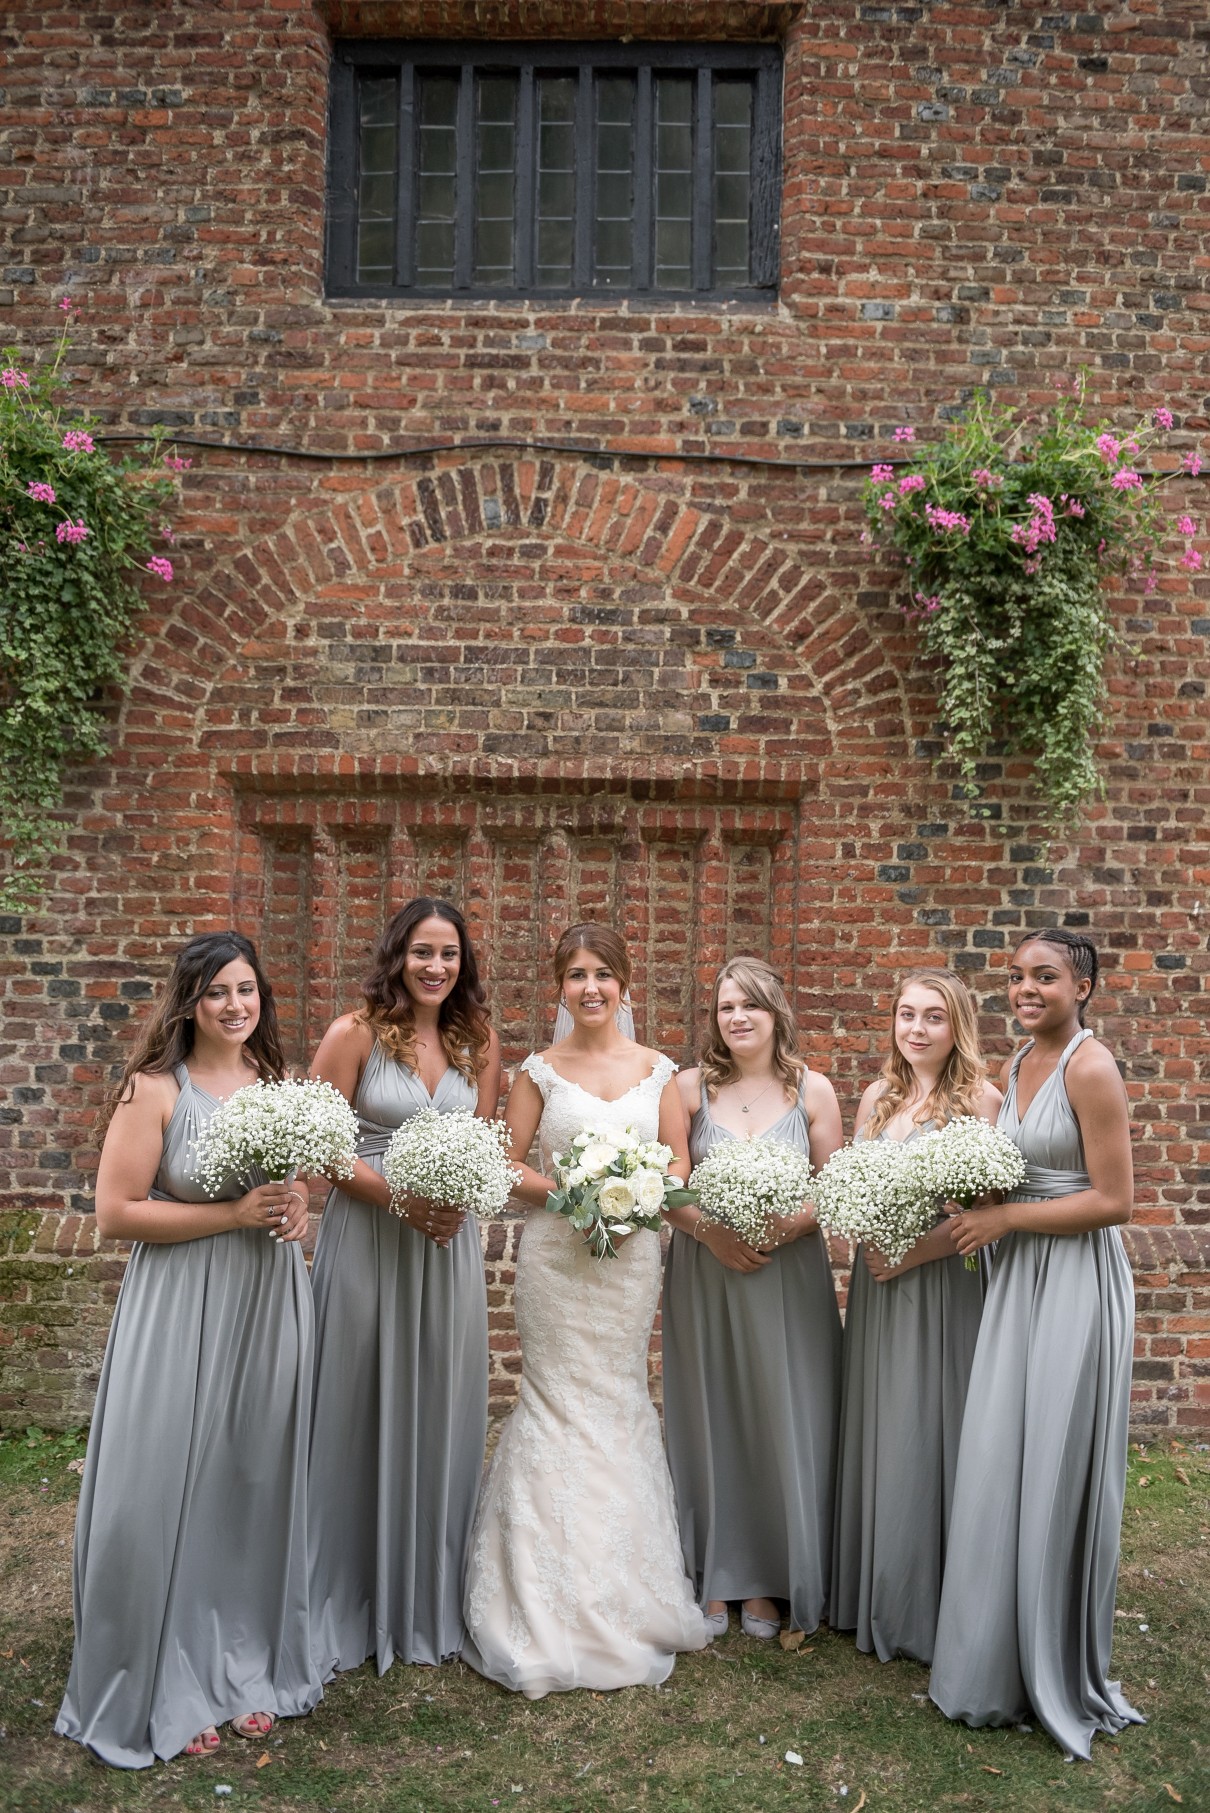 Wedding photography at Tudor Barn in Eltham - bride and bridesmaids